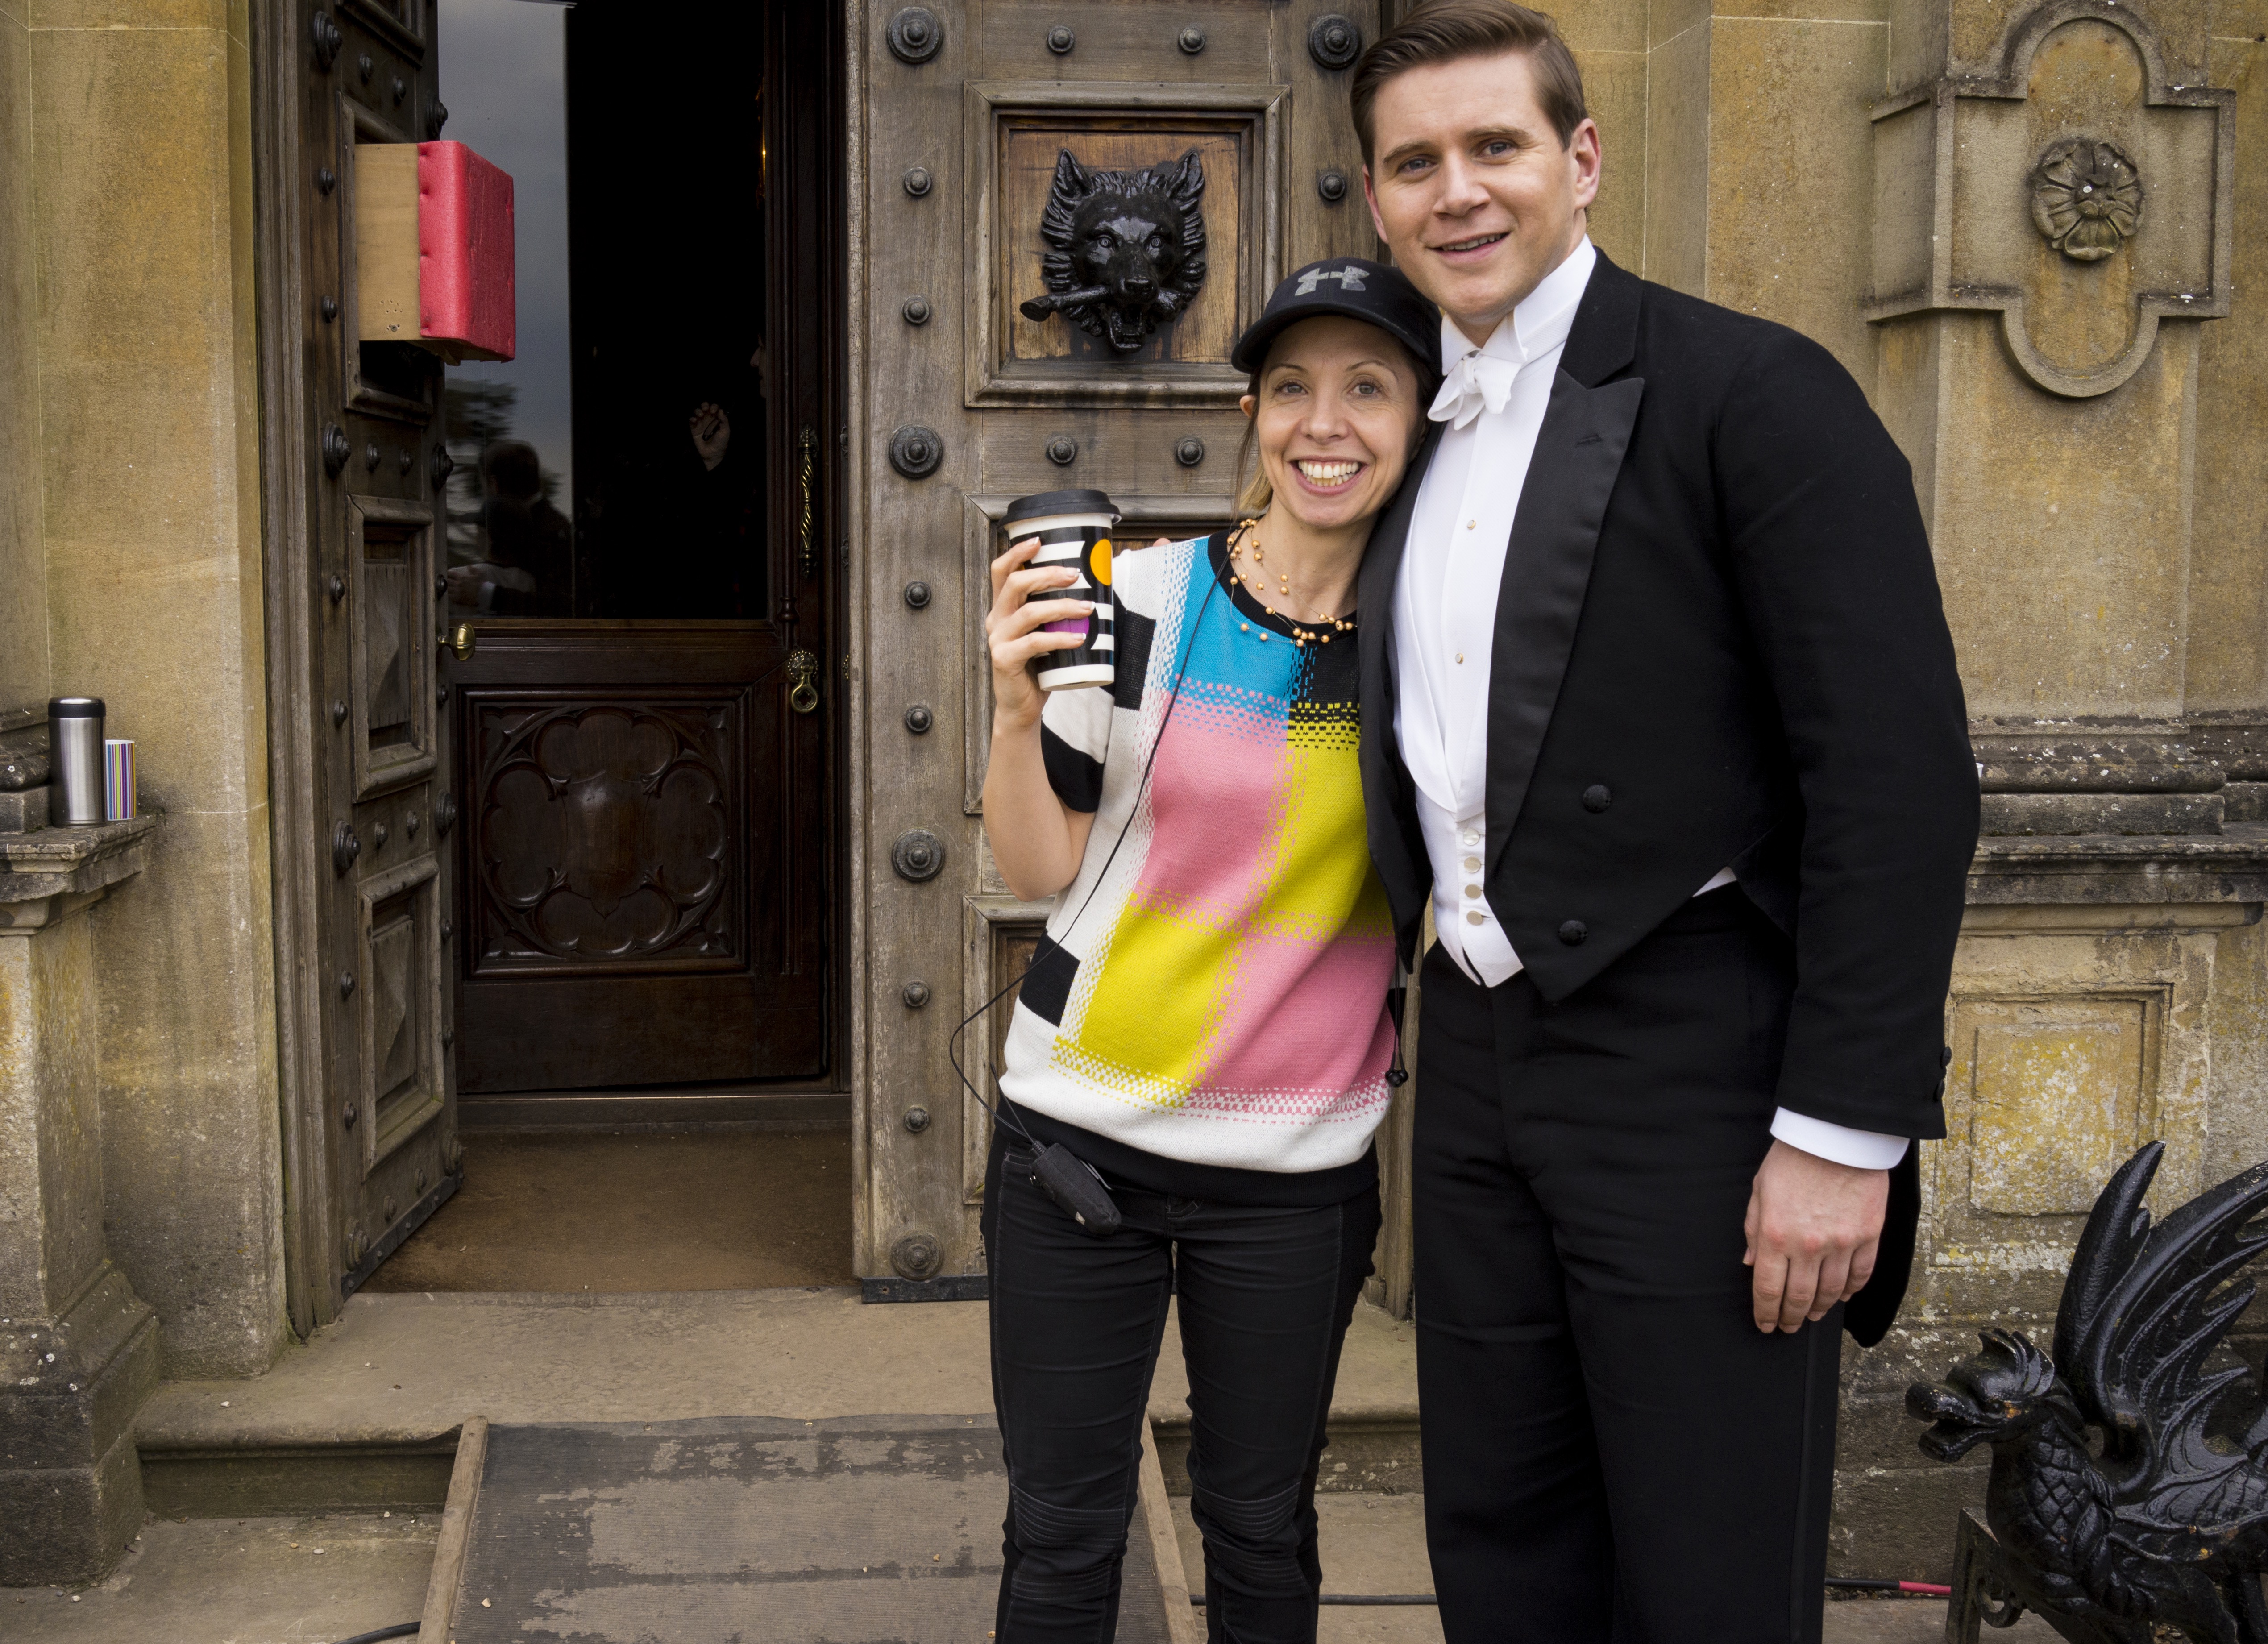 Minkie Spiro with Allan Leech on set of Downton Abbey